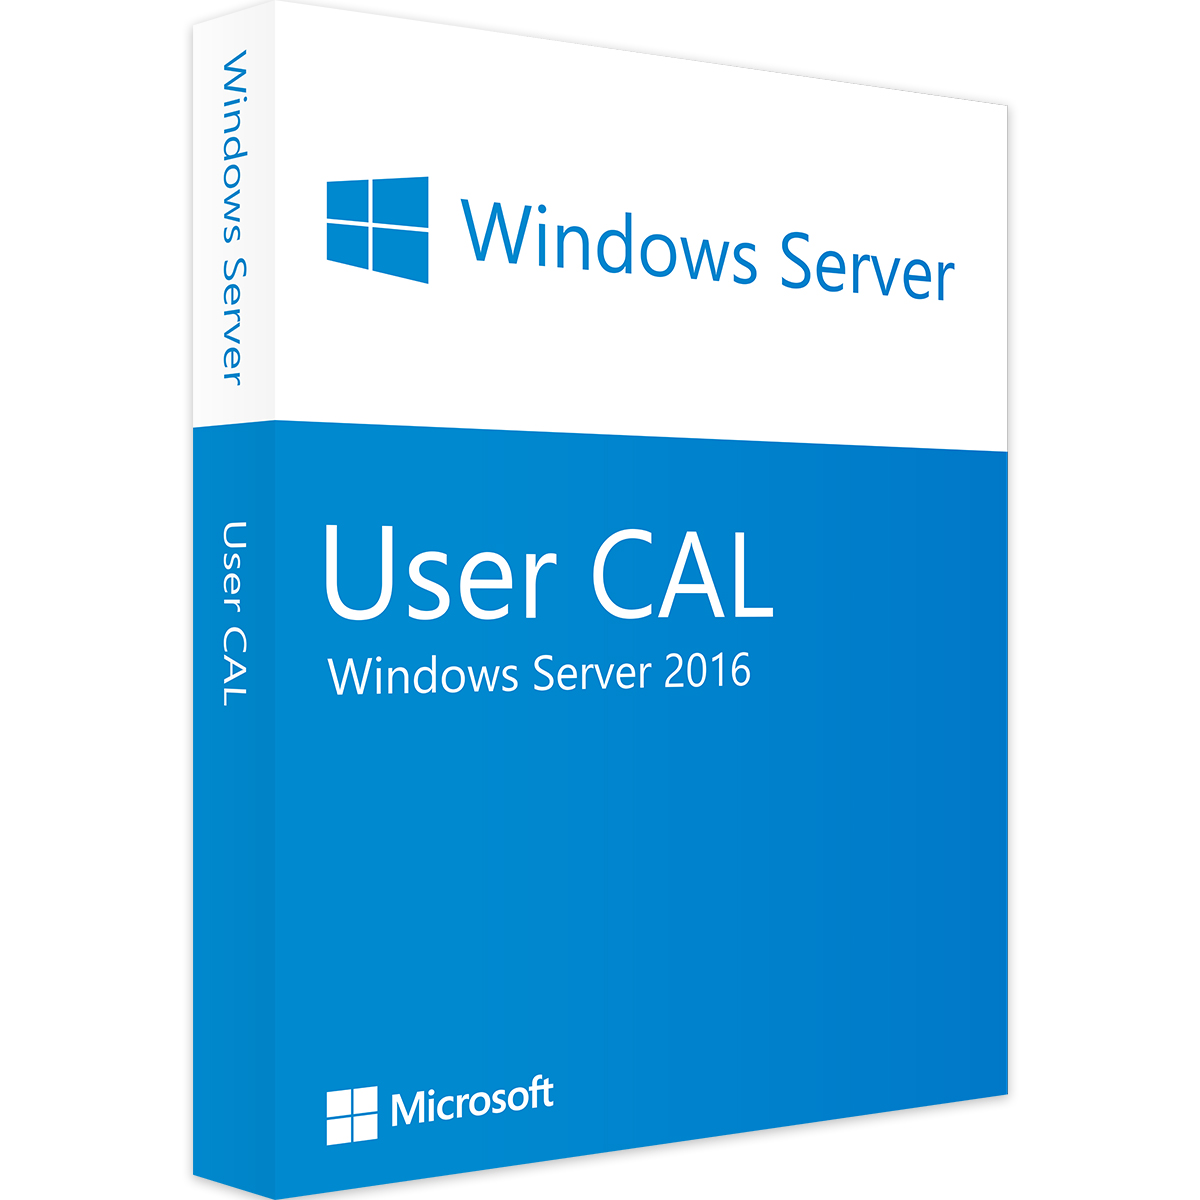 Windows Server Cals Windows Server Cals Windows Server 2016 10 6596